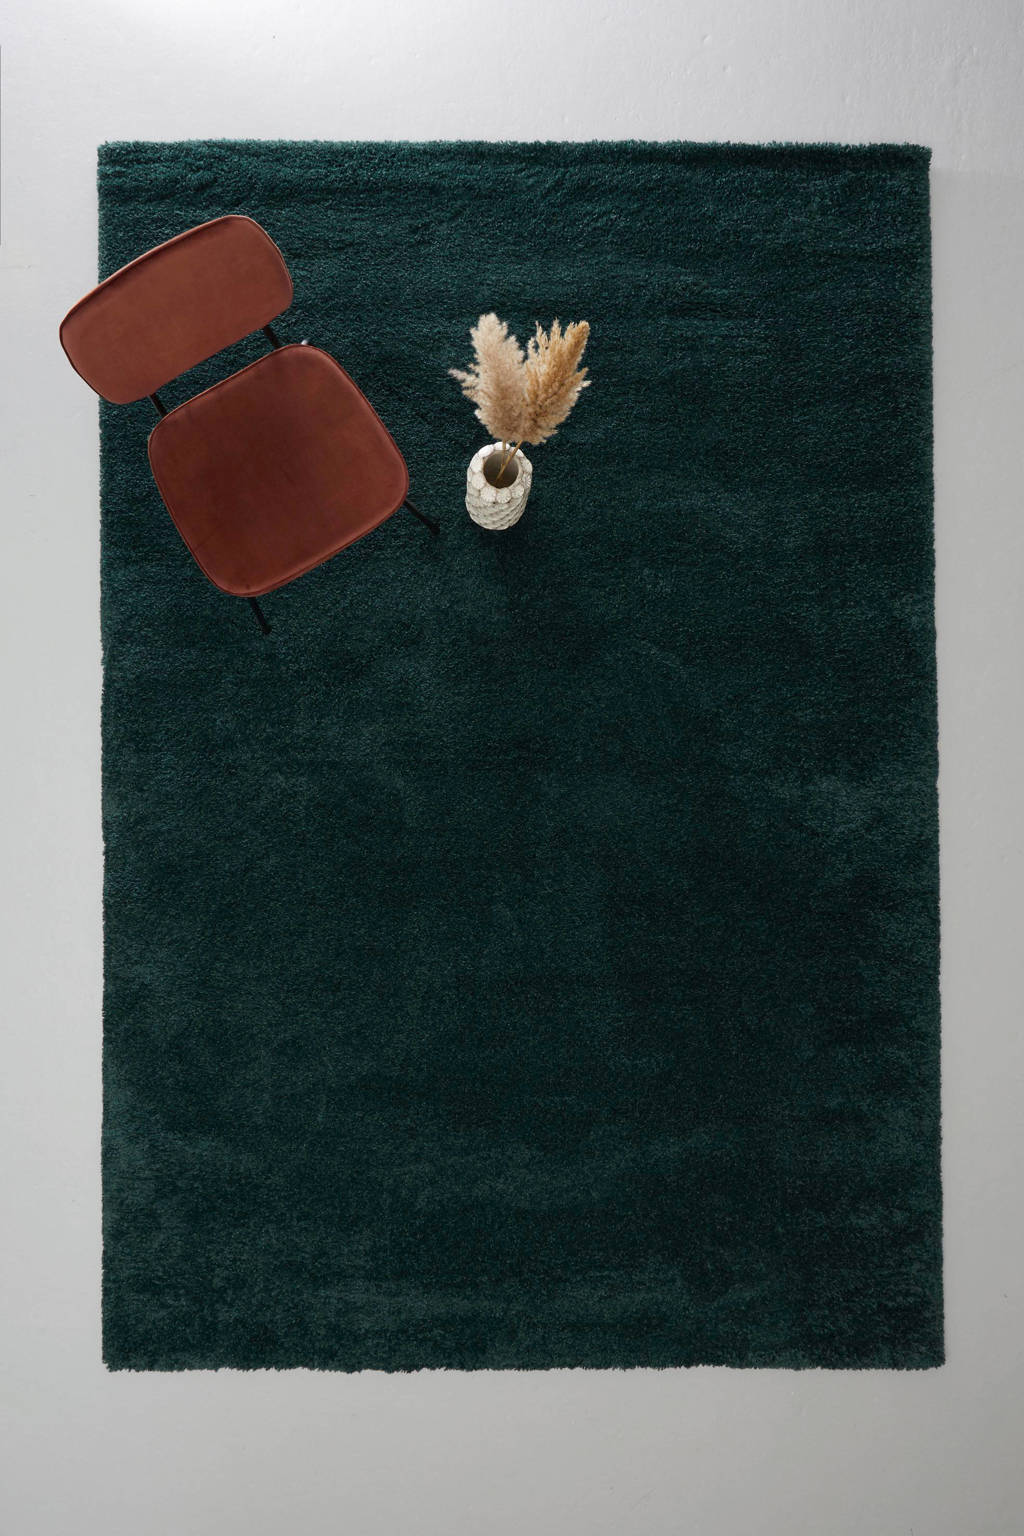 Specificiteit namens Materialisme Wehkamp Home vloerkleed (290x200 cm) | wehkamp